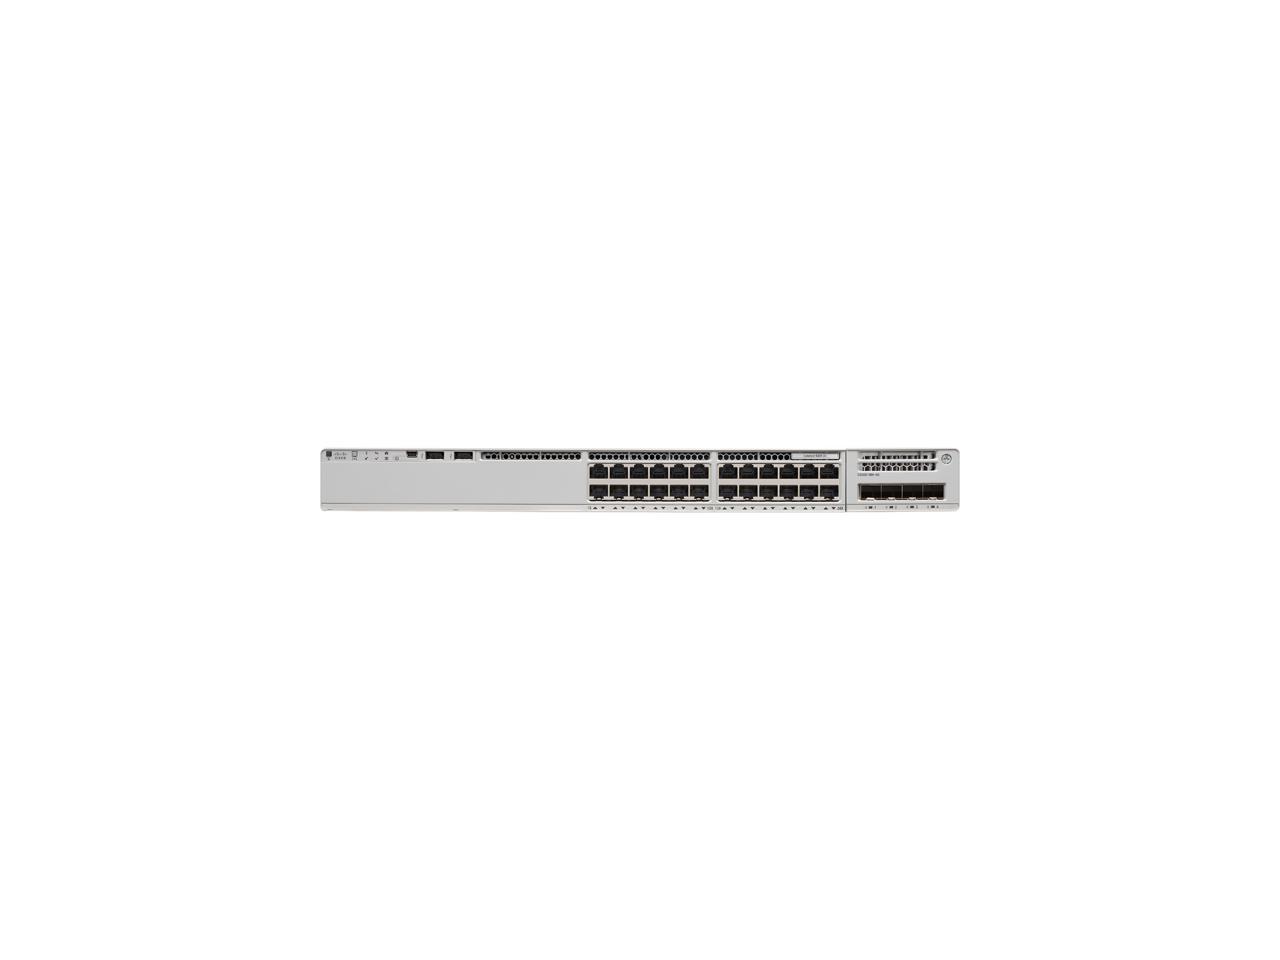 C9200L-24T-4X-A | Cisco Catalyst 9200l L3 Switch - 24 Ethernet Ports & 4 10-gigabit SFP+ Uplink Ports - NEW